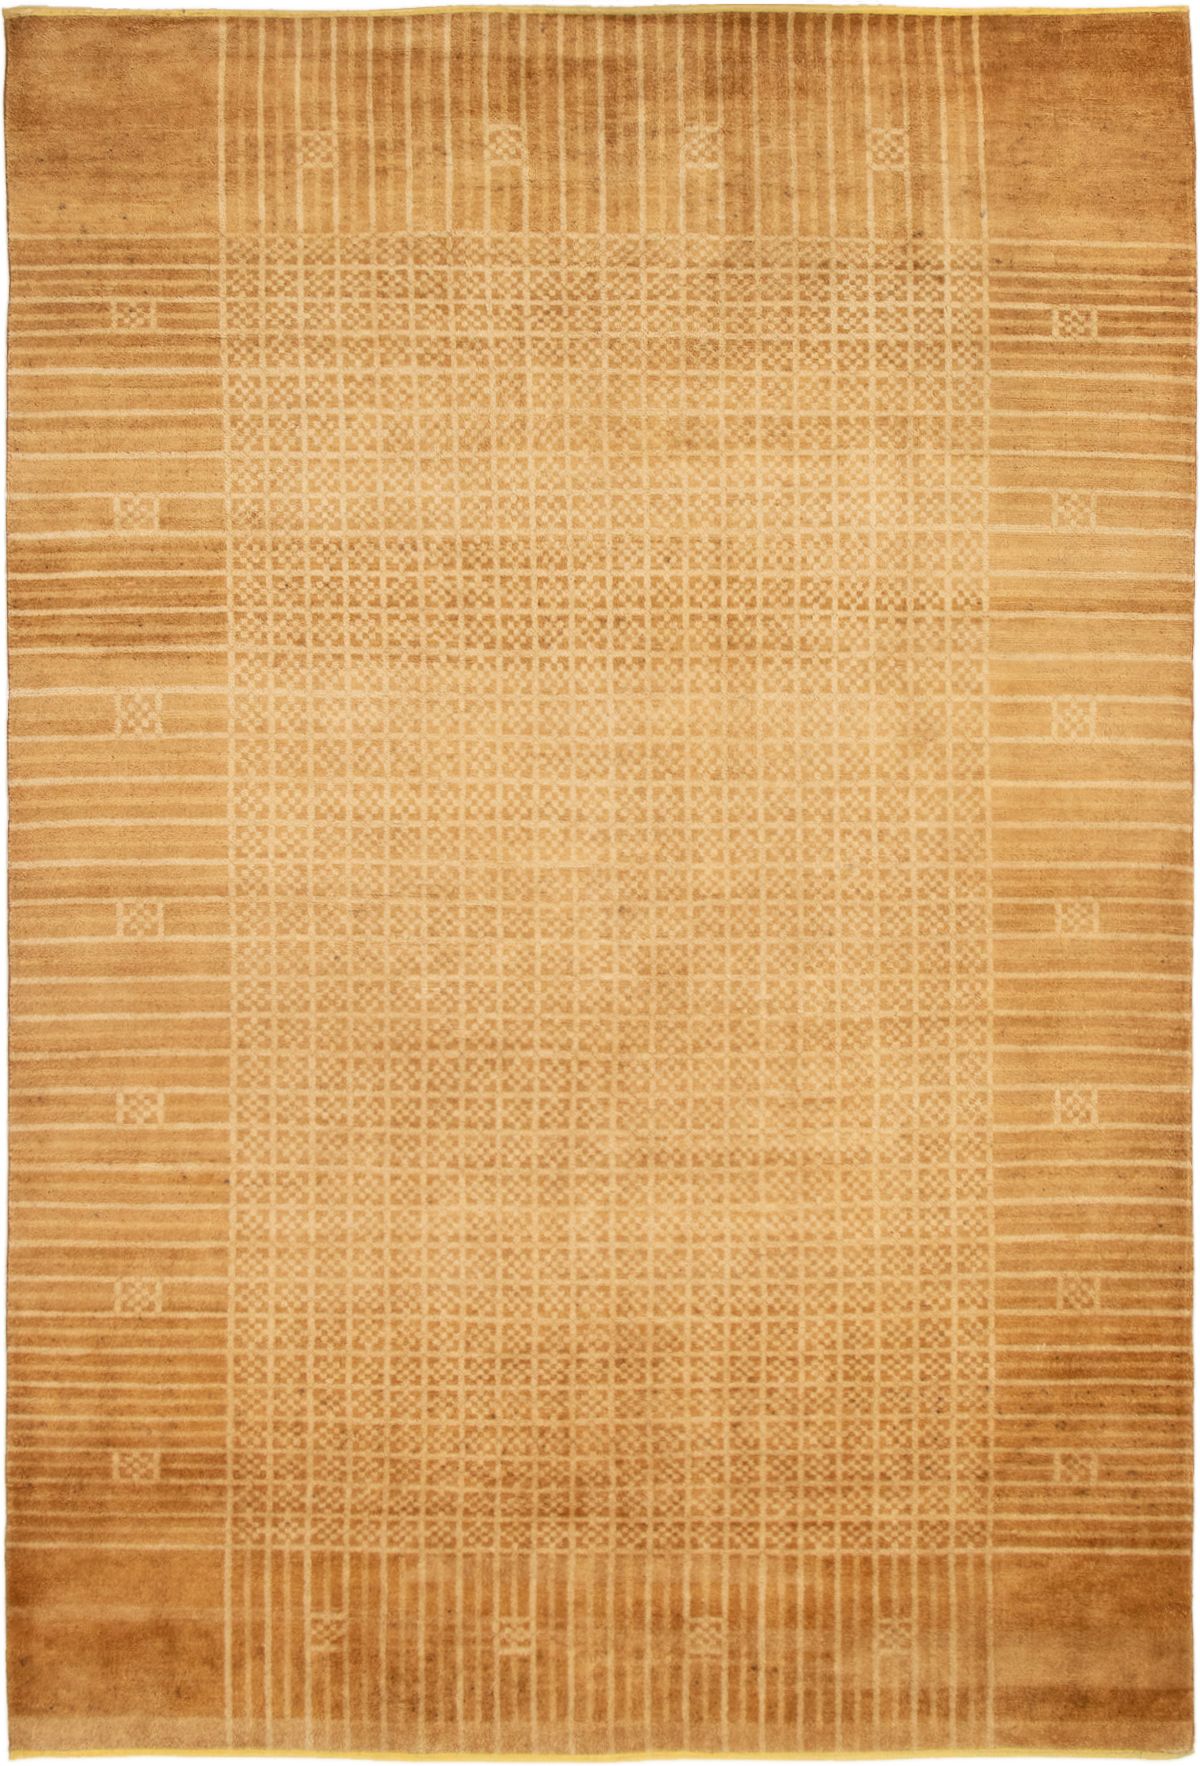 Hand-knotted Finest Ziegler Chobi Light Brown Wool Rug 6'0" x 9'4" Size: 6'0" x 9'4"  